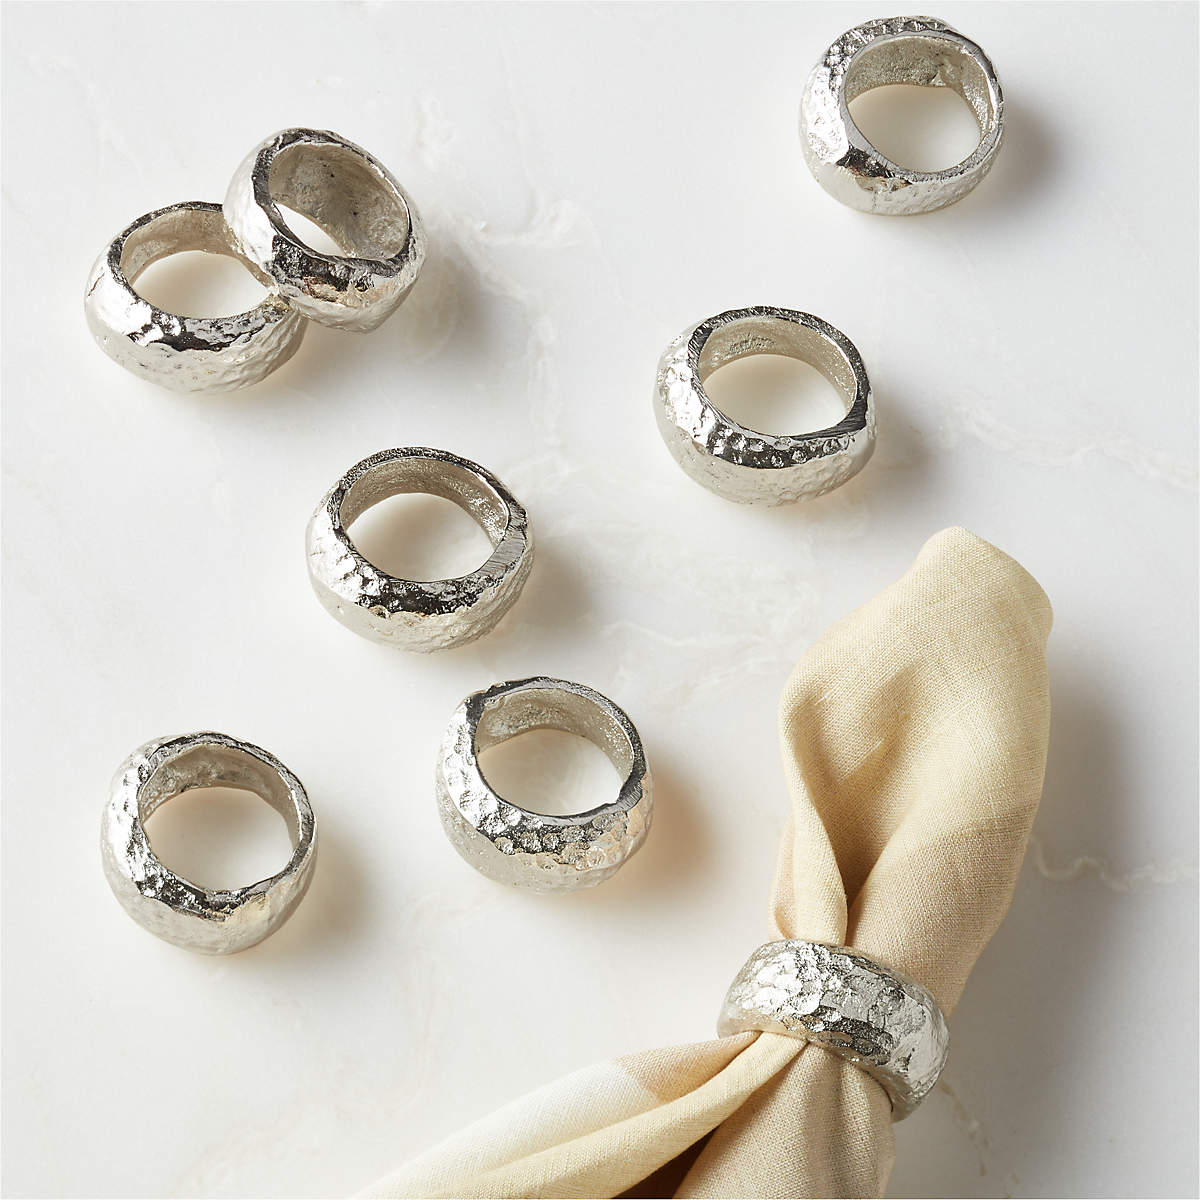 dynasty-pitted-platinum-napkin-rings-set-of-8.jpg